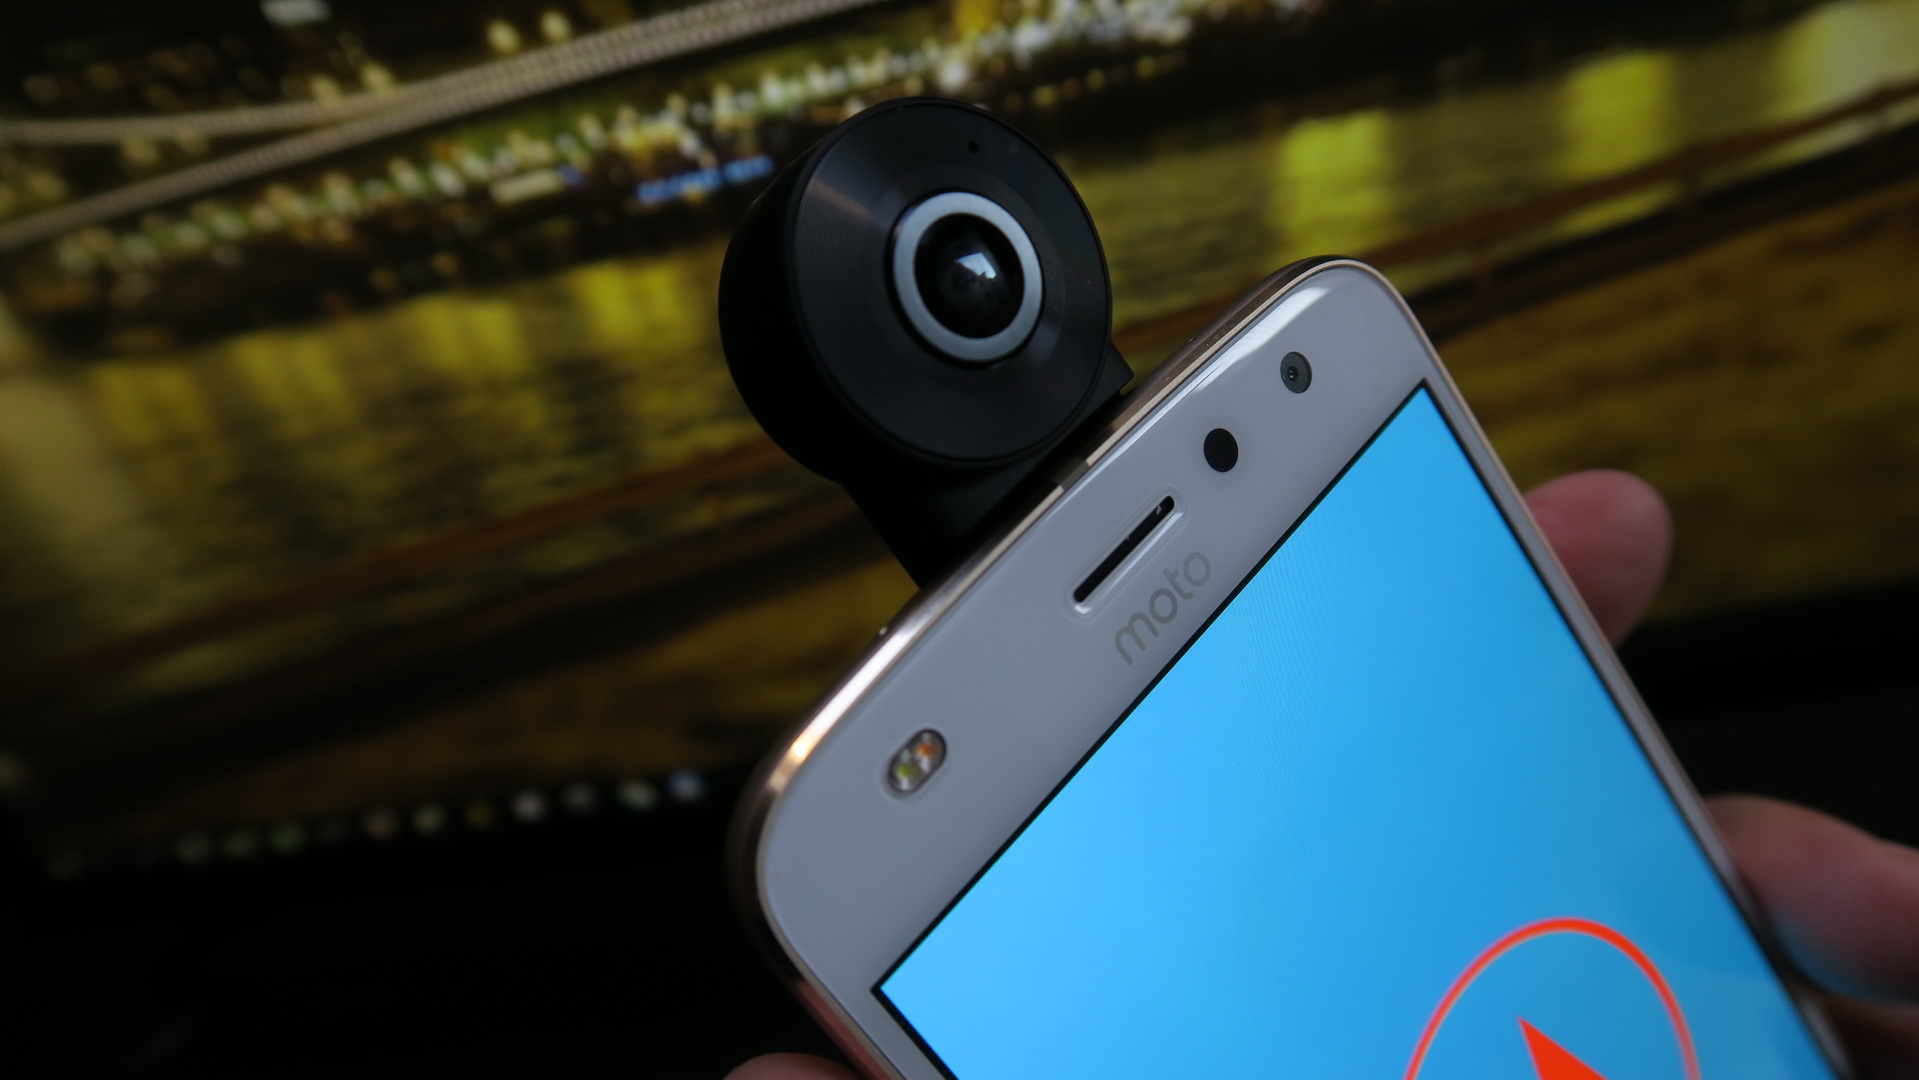 2017 Moto Mods Review Moto 360 Camera, Moto Turbo Power